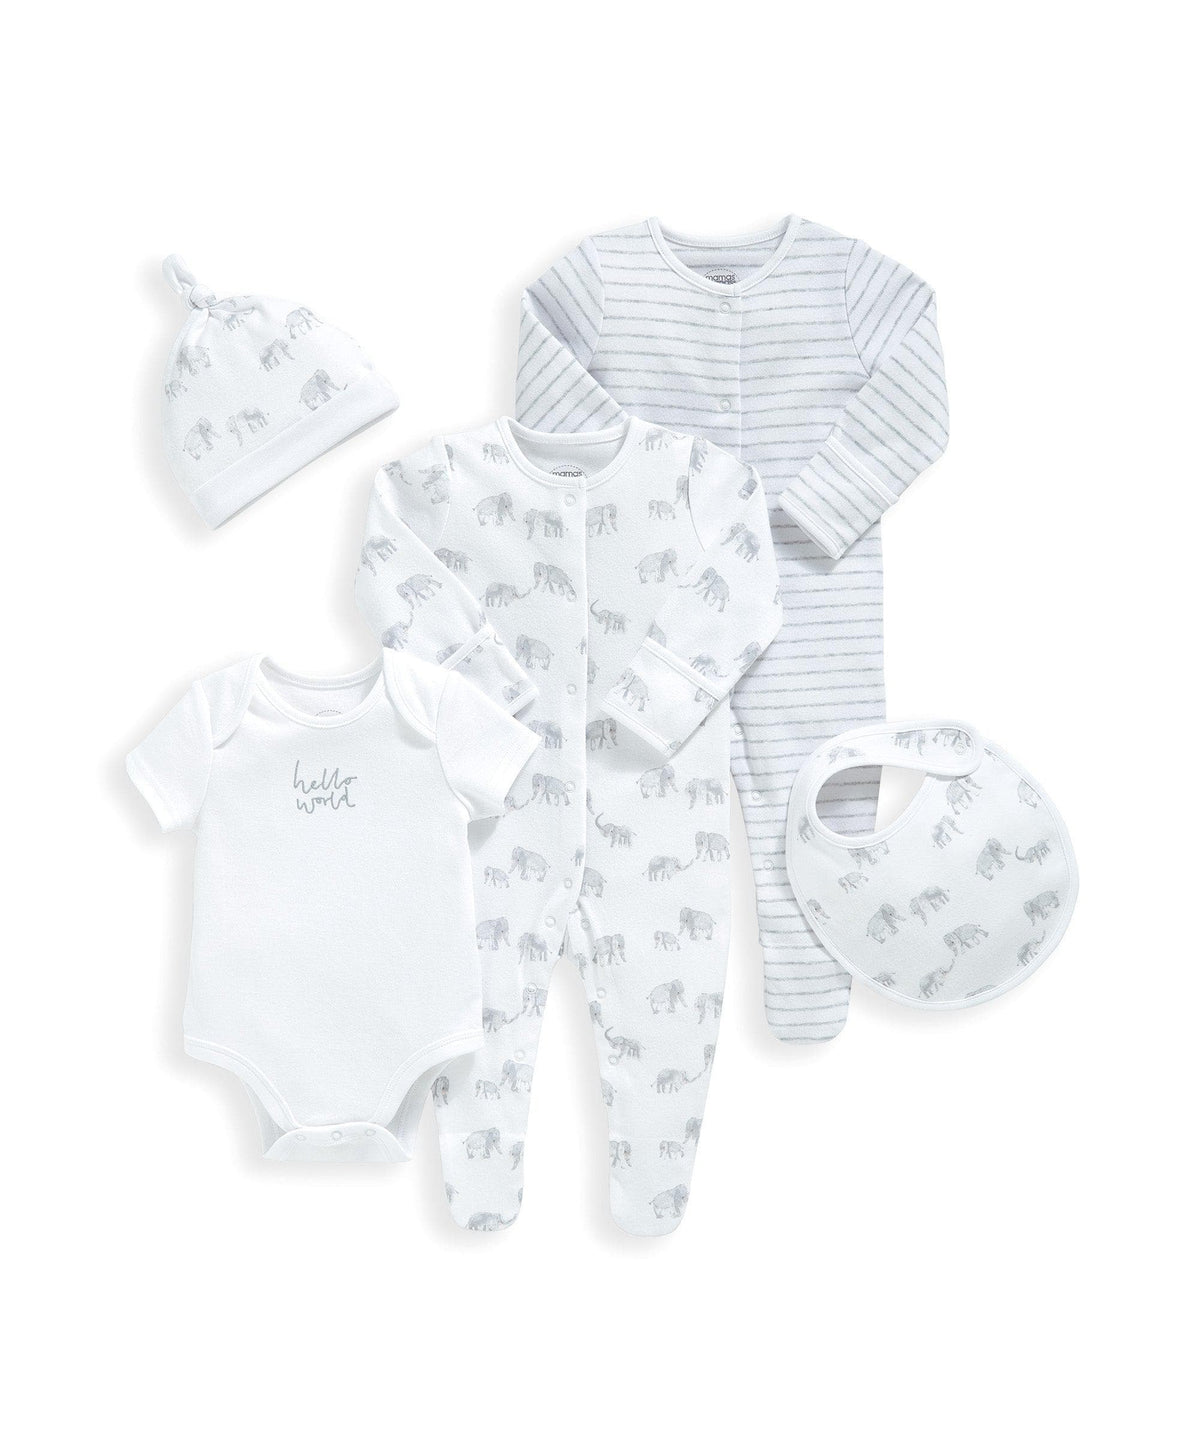 Buy Baby Gear & Maternité Sac maman Clothes Online for Sale - PatPat US  Mobile